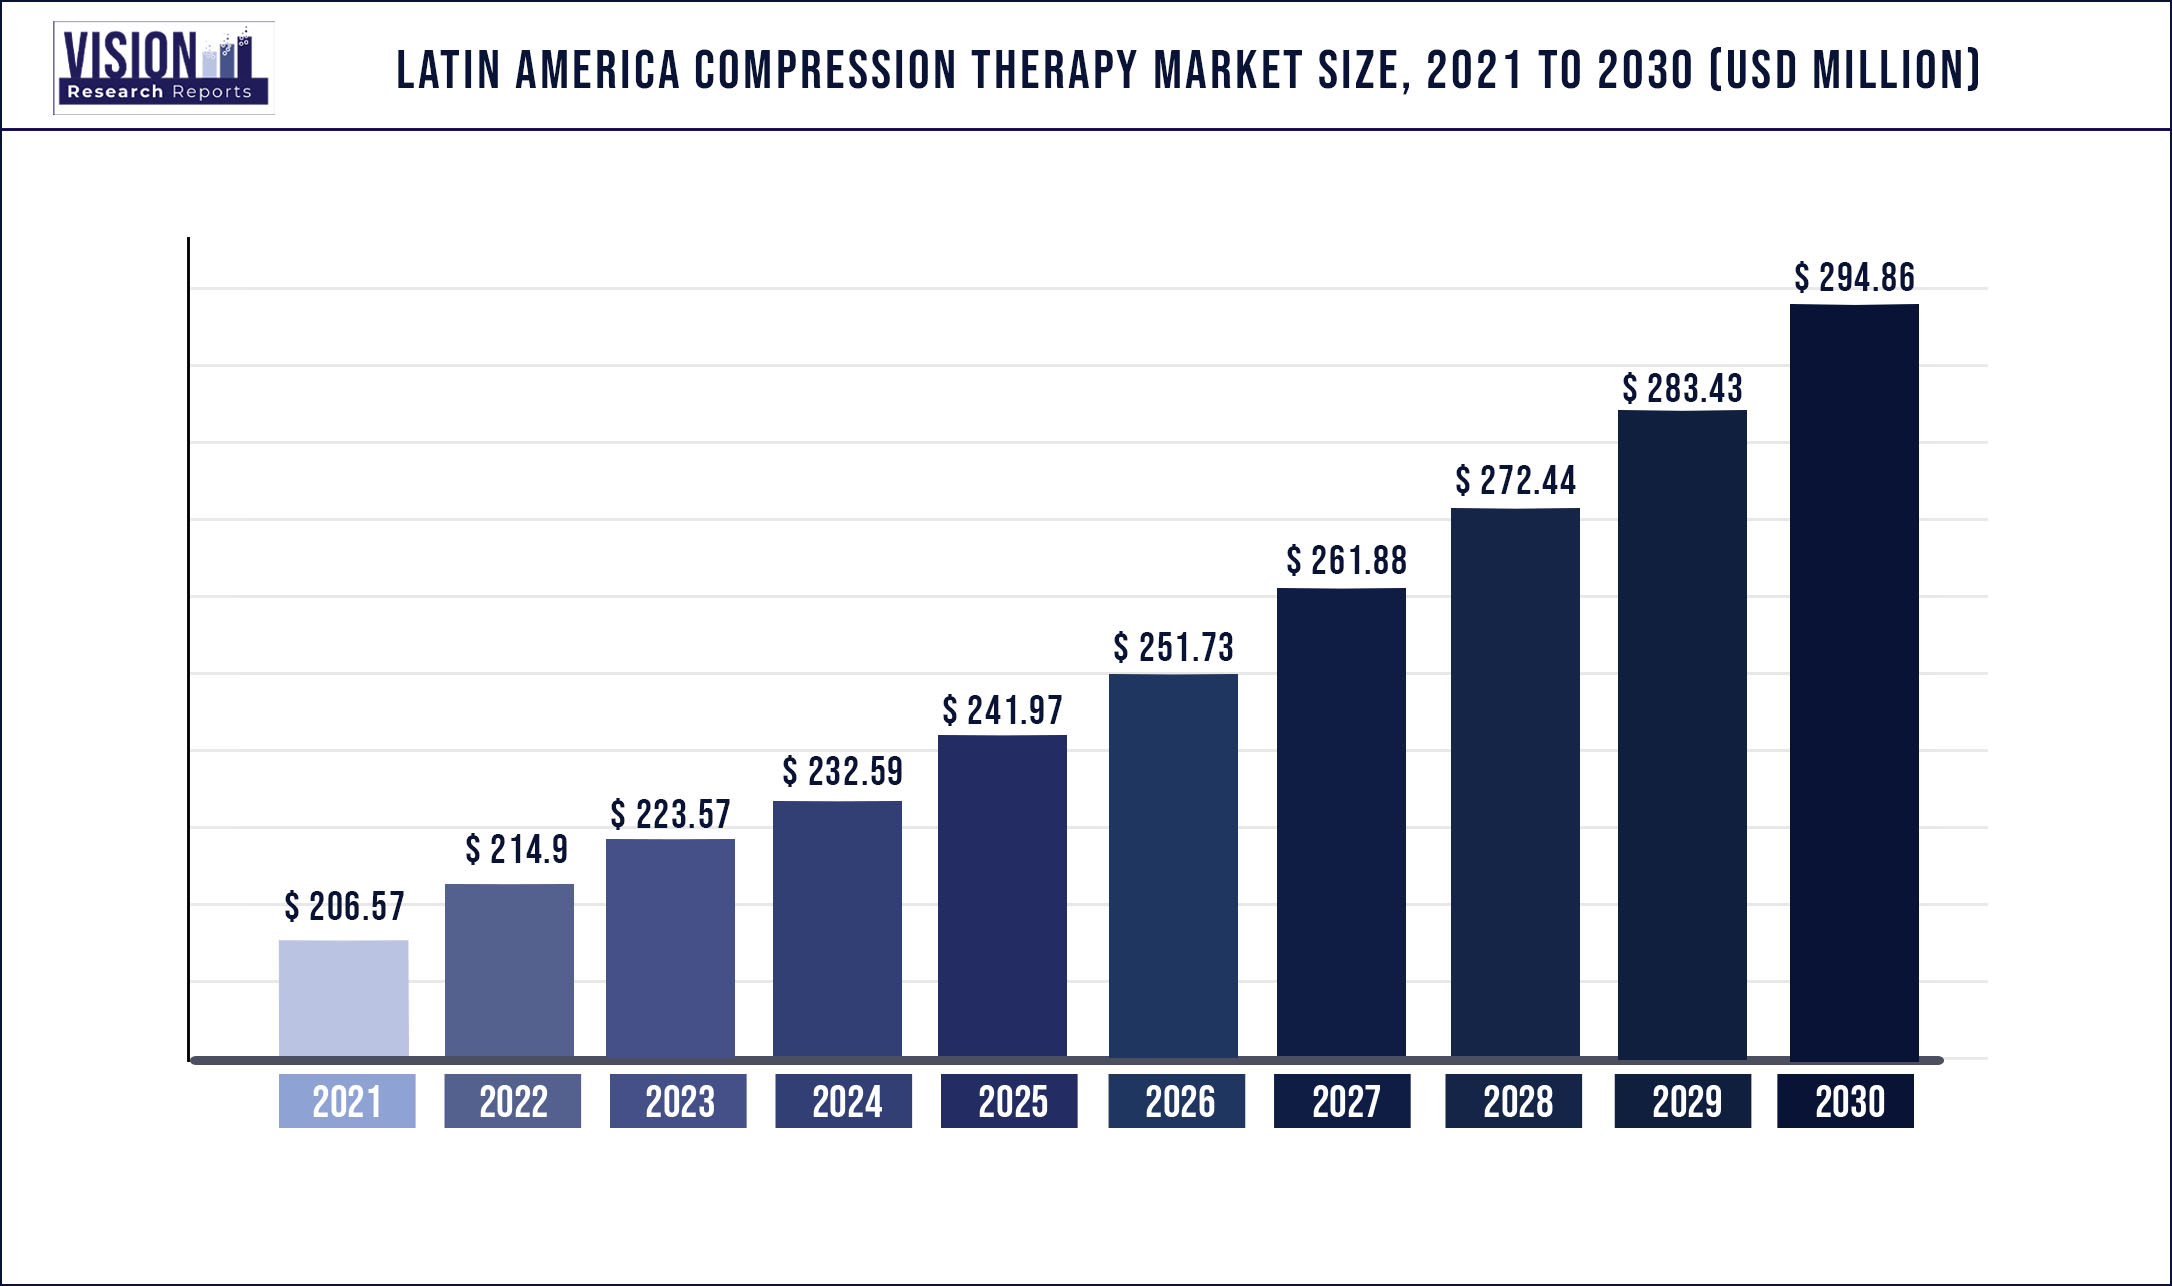 Latin America Compression Therapy Market Size 2021 to 2030